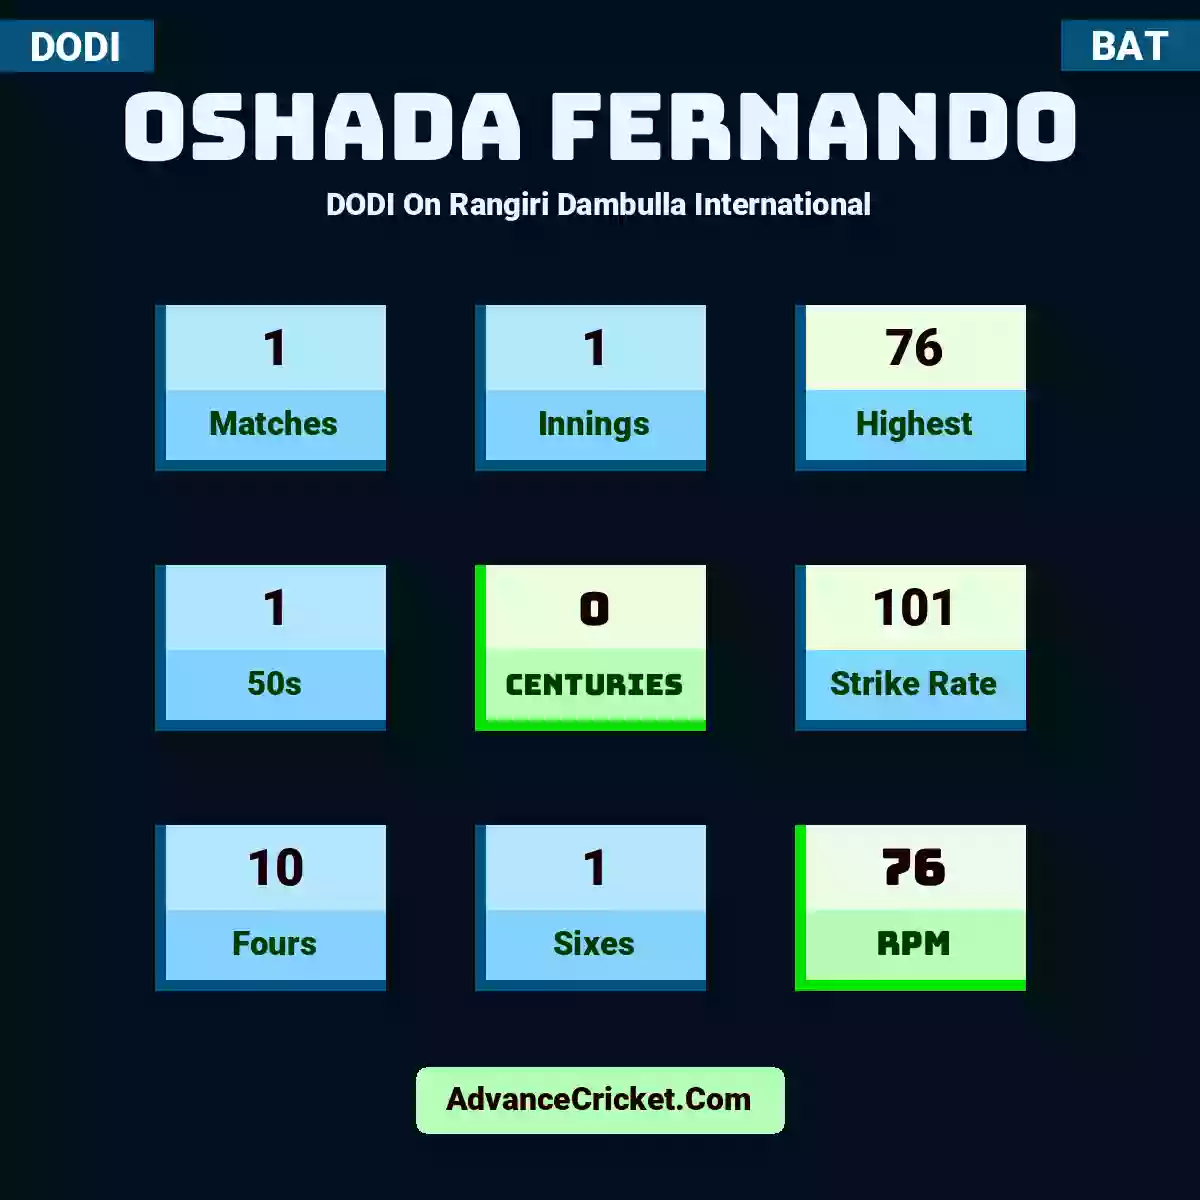 Oshada Fernando DODI  On Rangiri Dambulla International, Oshada Fernando played 1 matches, scored 76 runs as highest, 1 half-centuries, and 0 centuries, with a strike rate of 101. O.Fernando hit 10 fours and 1 sixes, with an RPM of 76.